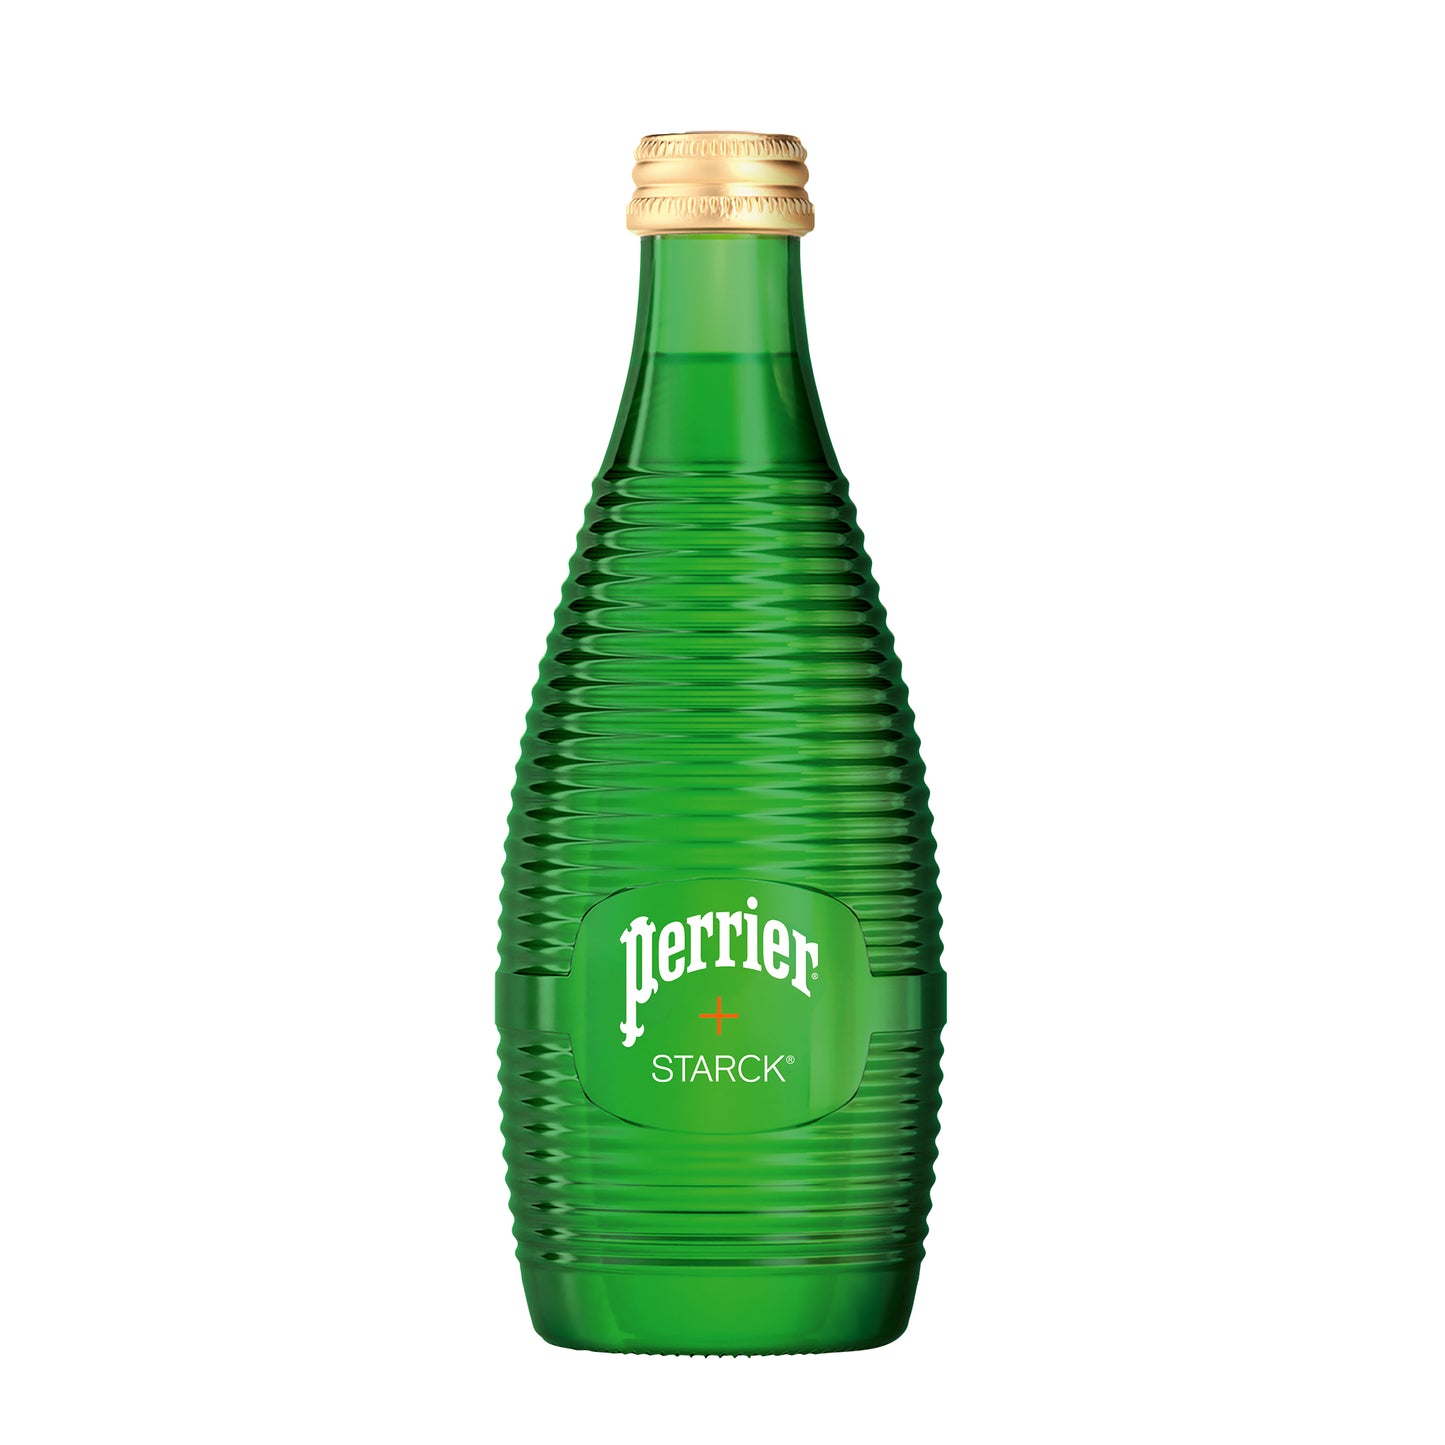 Perrier + Starck | 311ml x 24 Glass Bottles